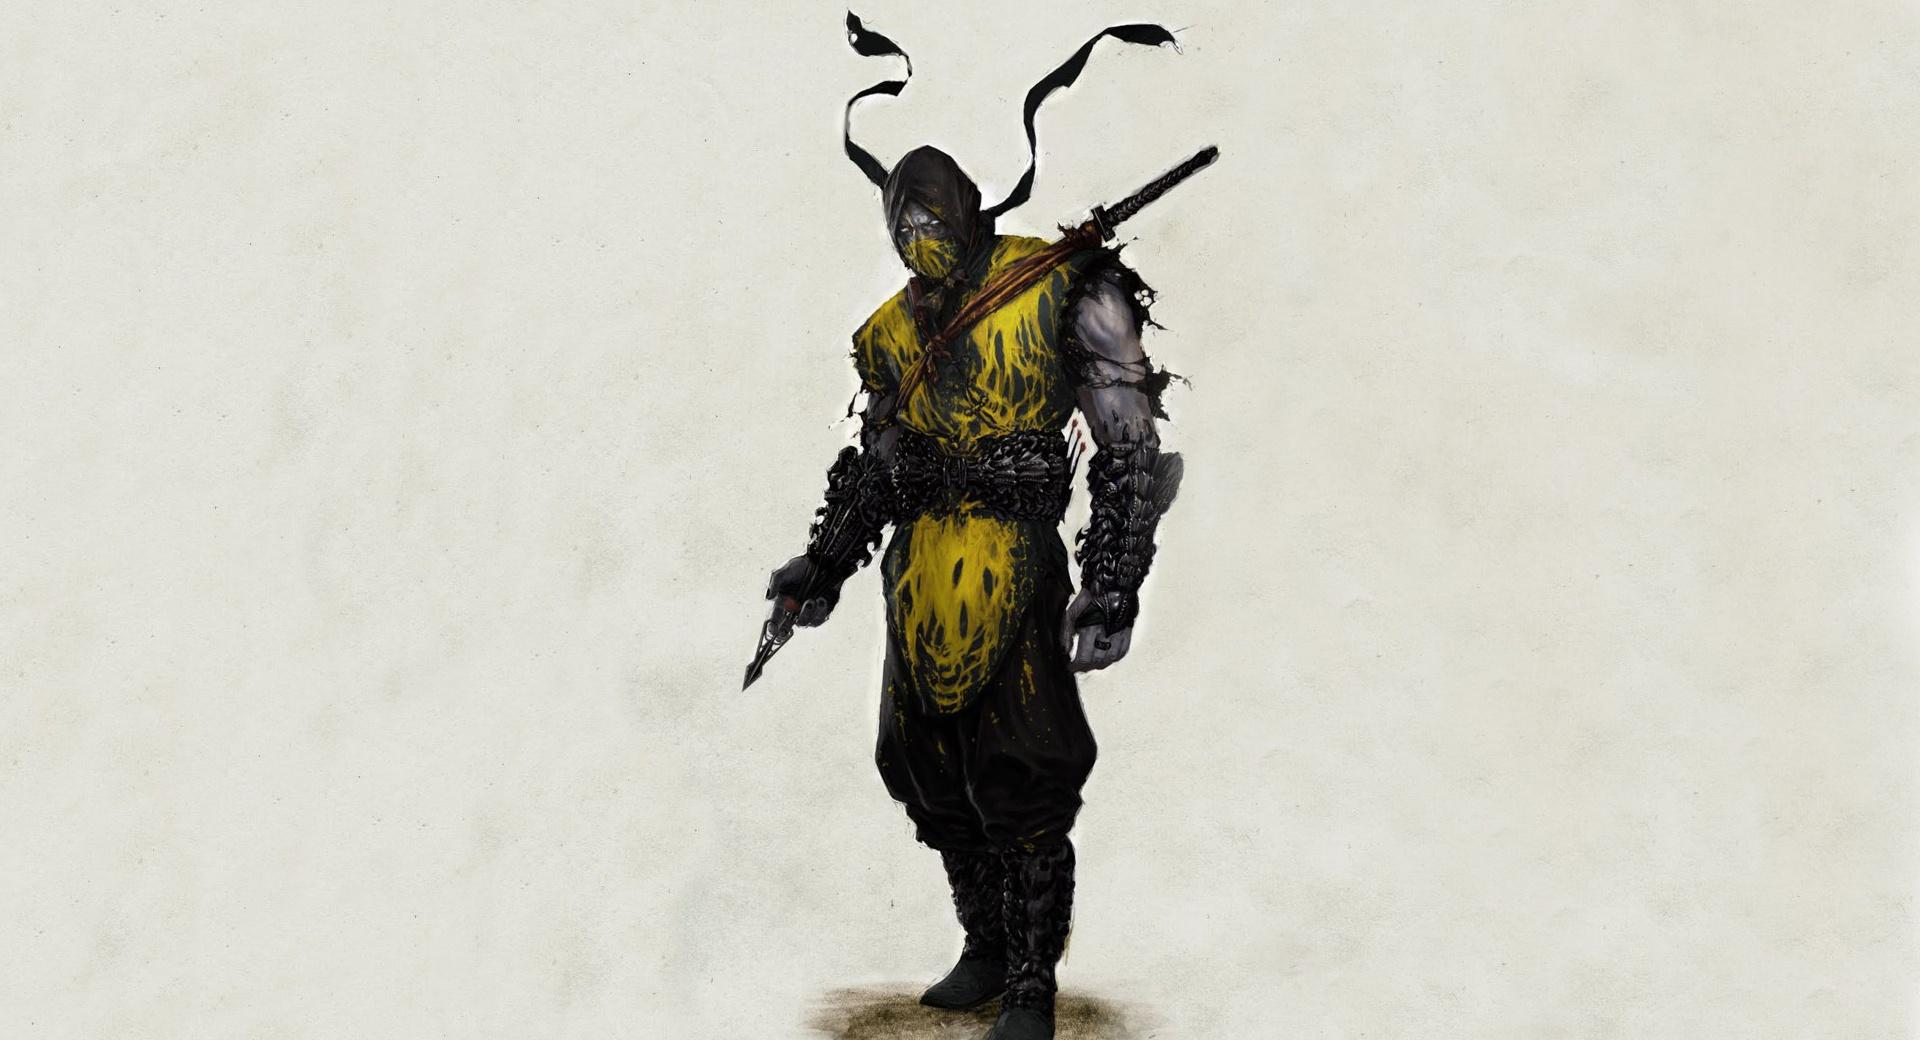 Mortal Kombat Scorpion Drawing at 320 x 480 iPhone size wallpapers HD quality